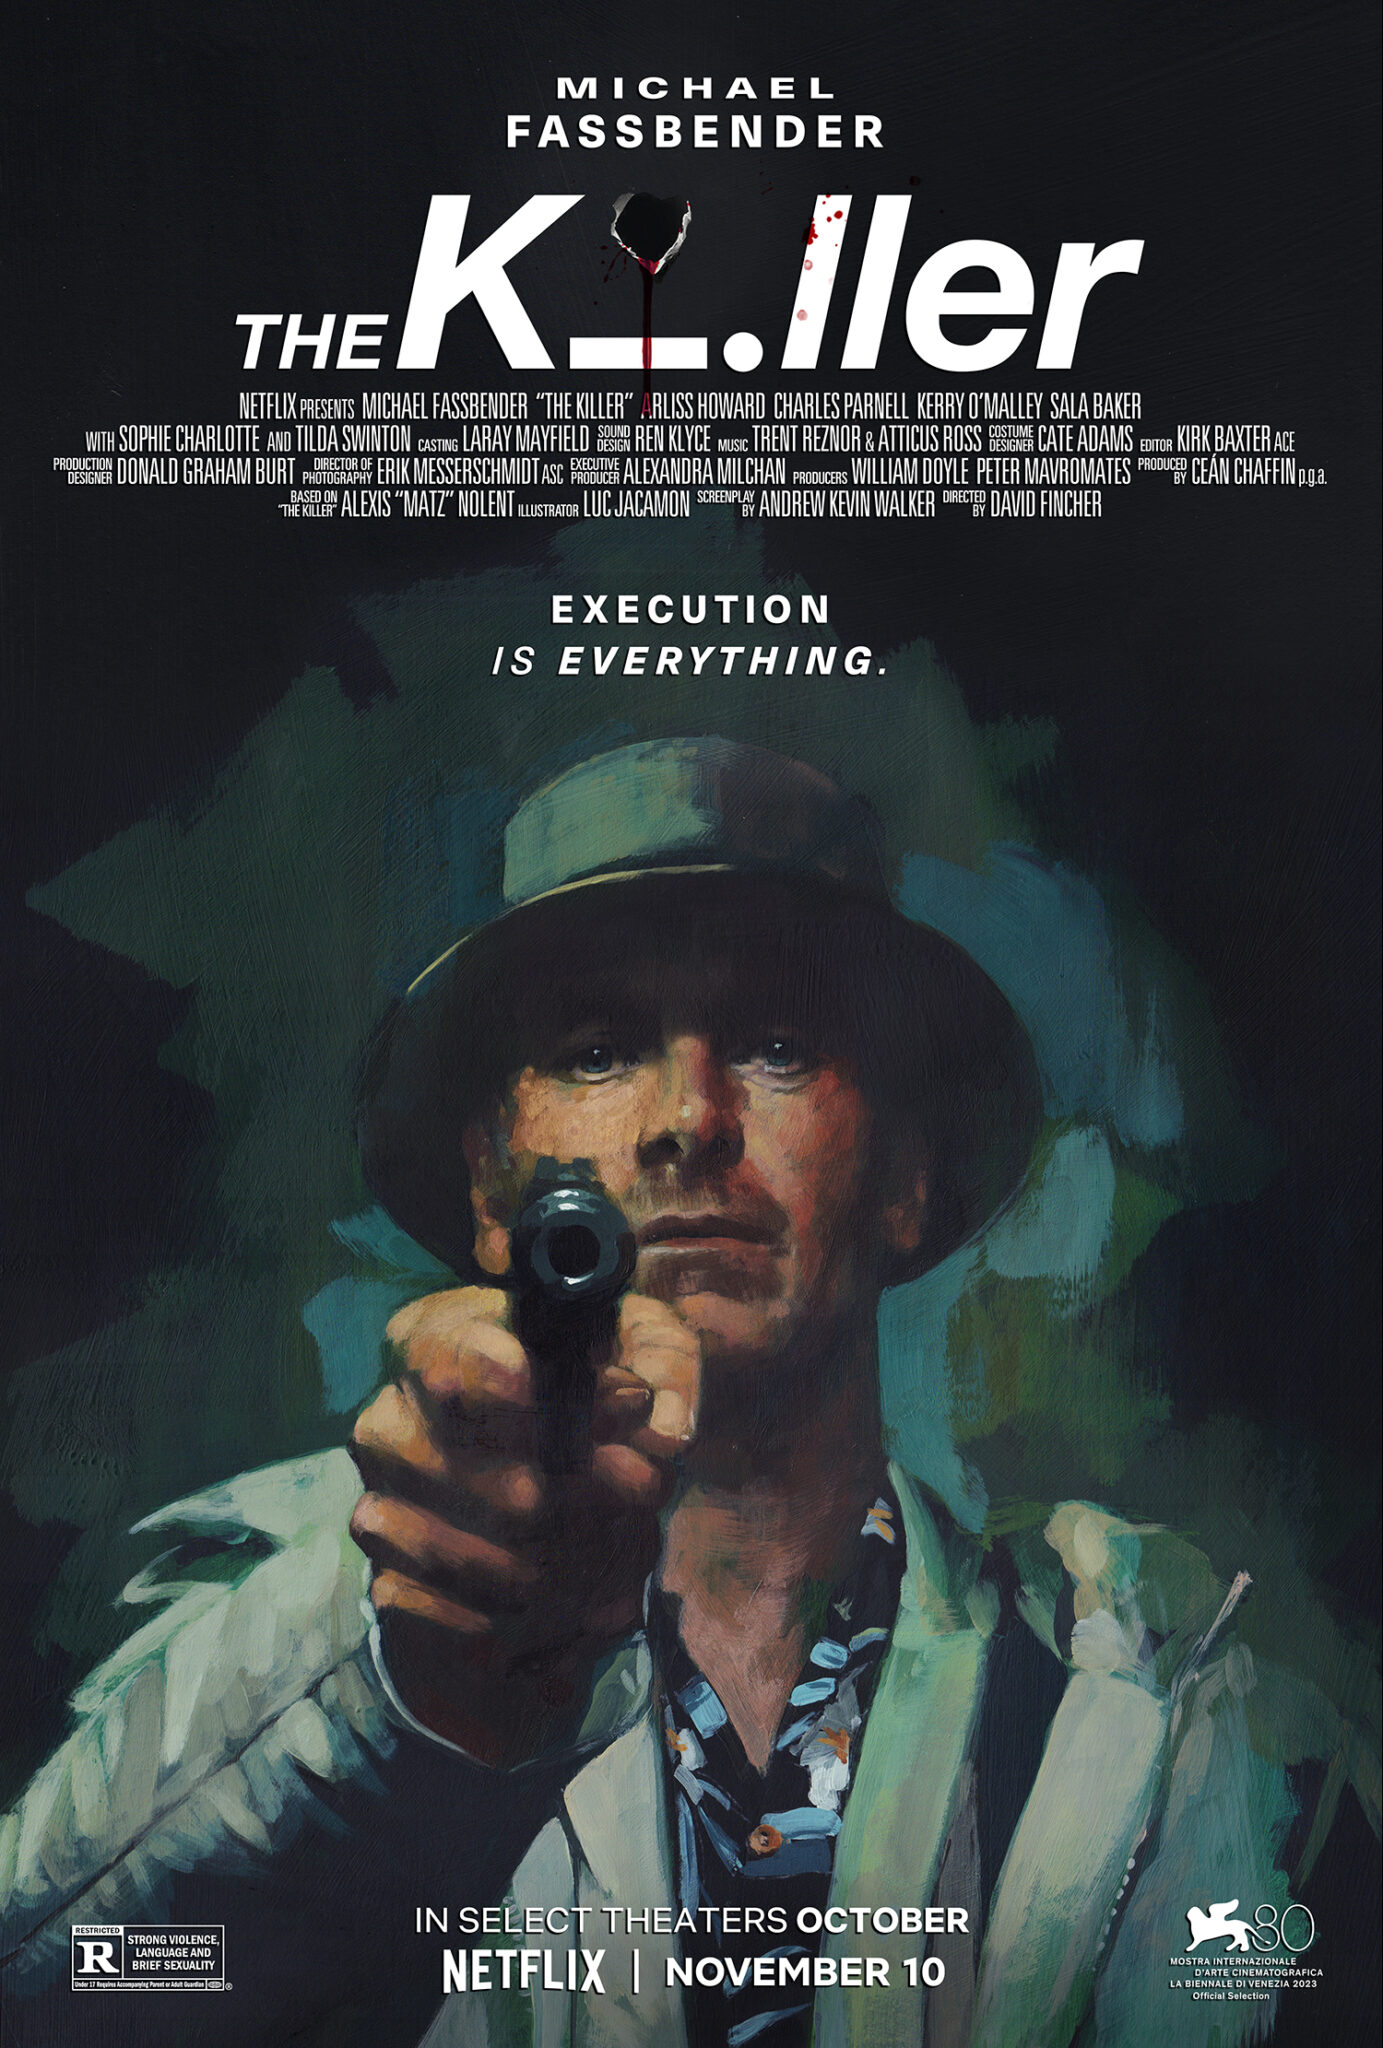 Plakat zum neuen Fincher-Film Der Killer